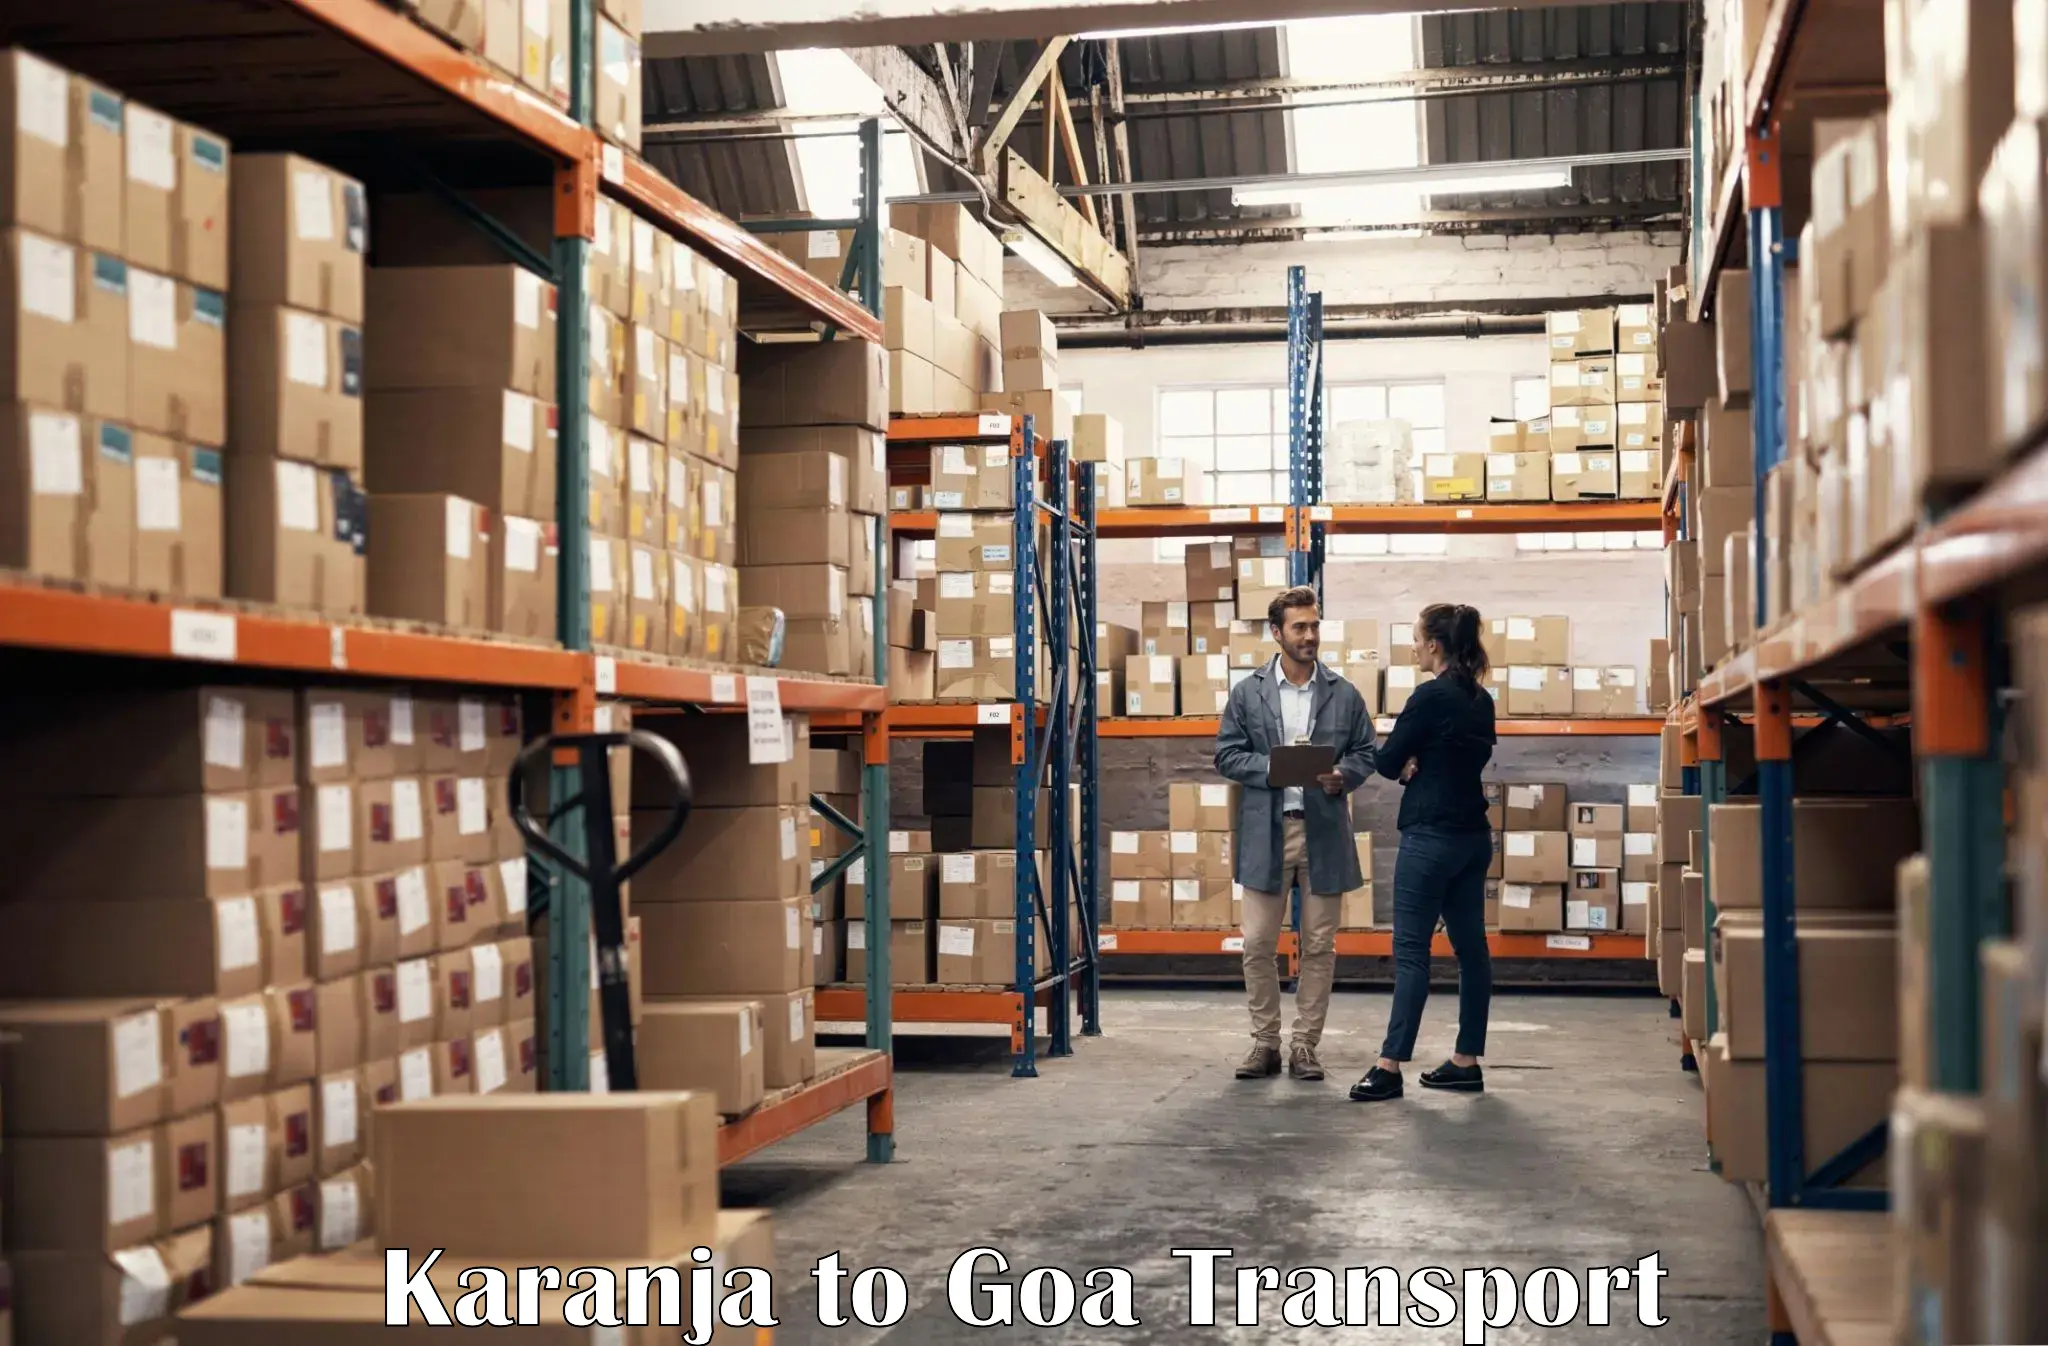 Express transport services in Karanja to Goa University